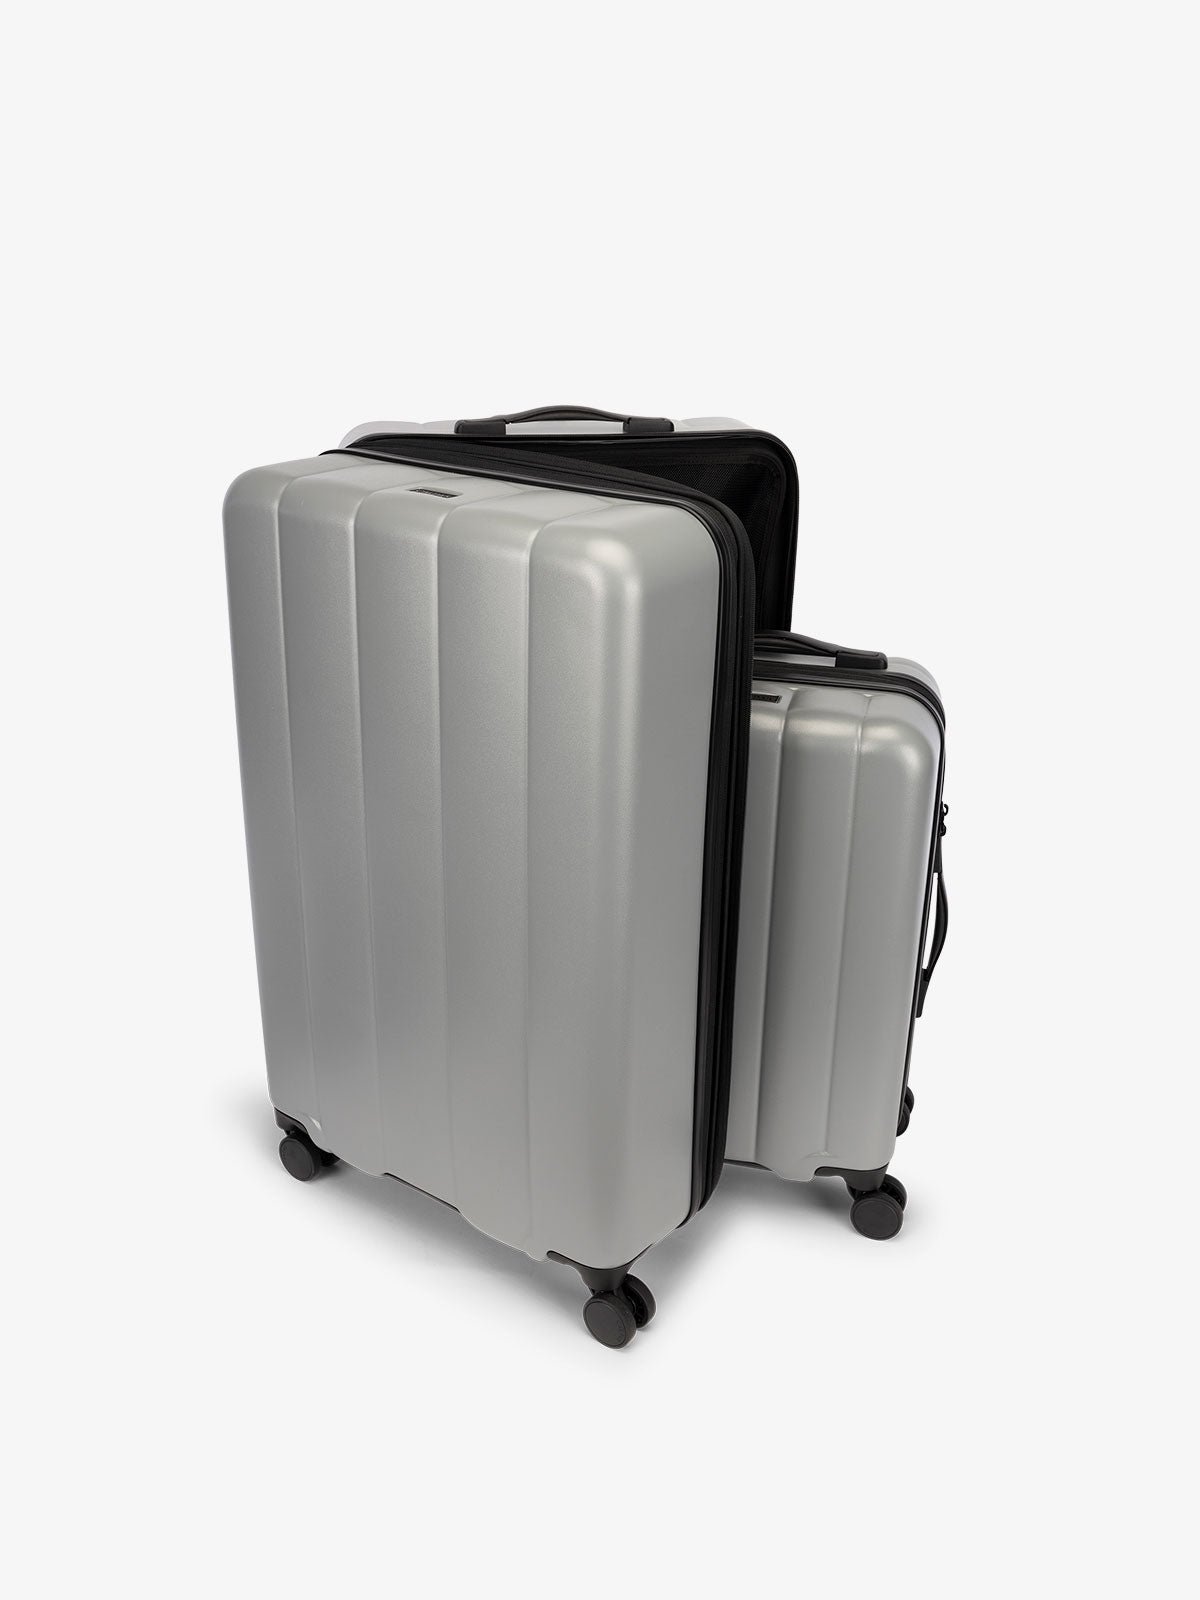 CALPAK Starter Bundle 2 piece hard side luggage set with 360 spinner wheels in smoke